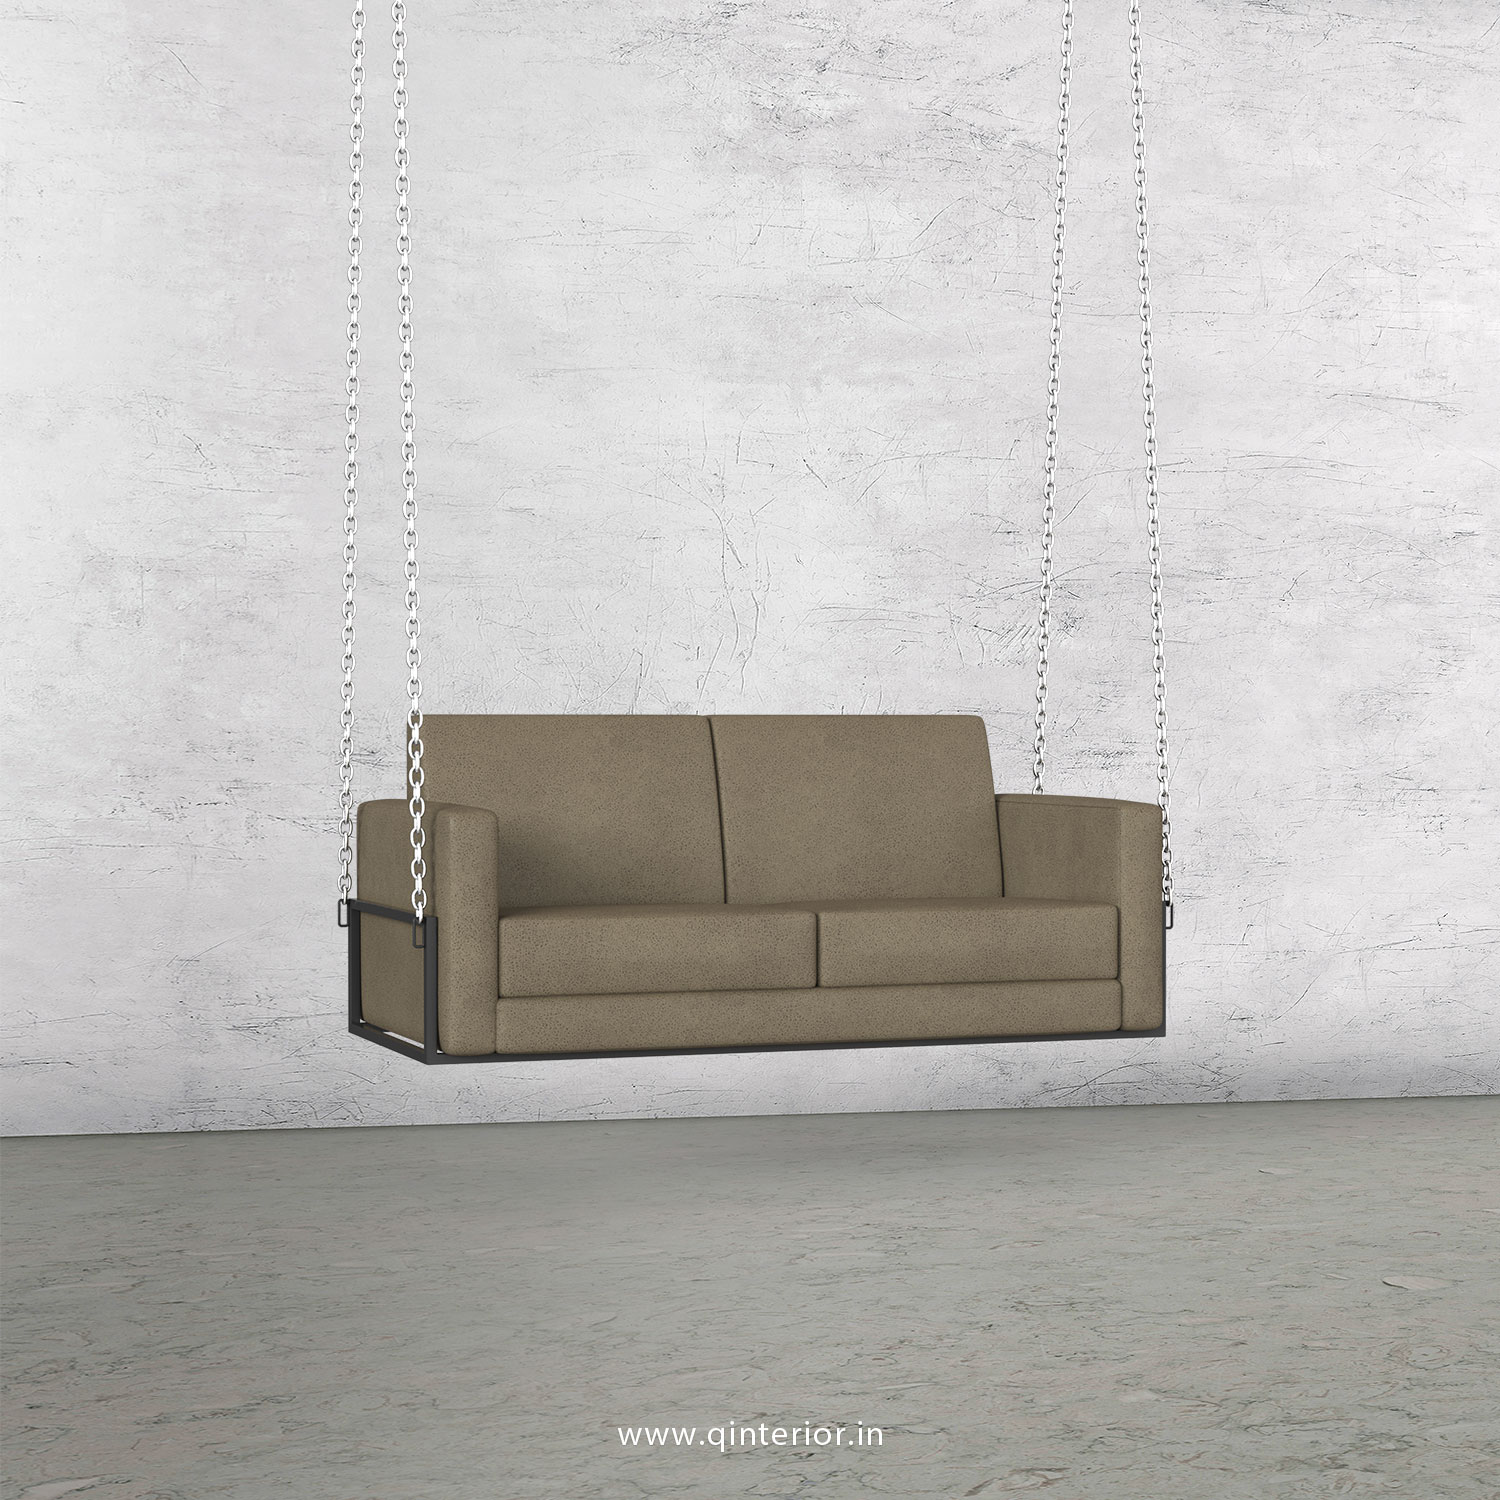 NIRVANA 2 Seater Swing Sofa in Fab Leather Fabric - SSF001 FL03